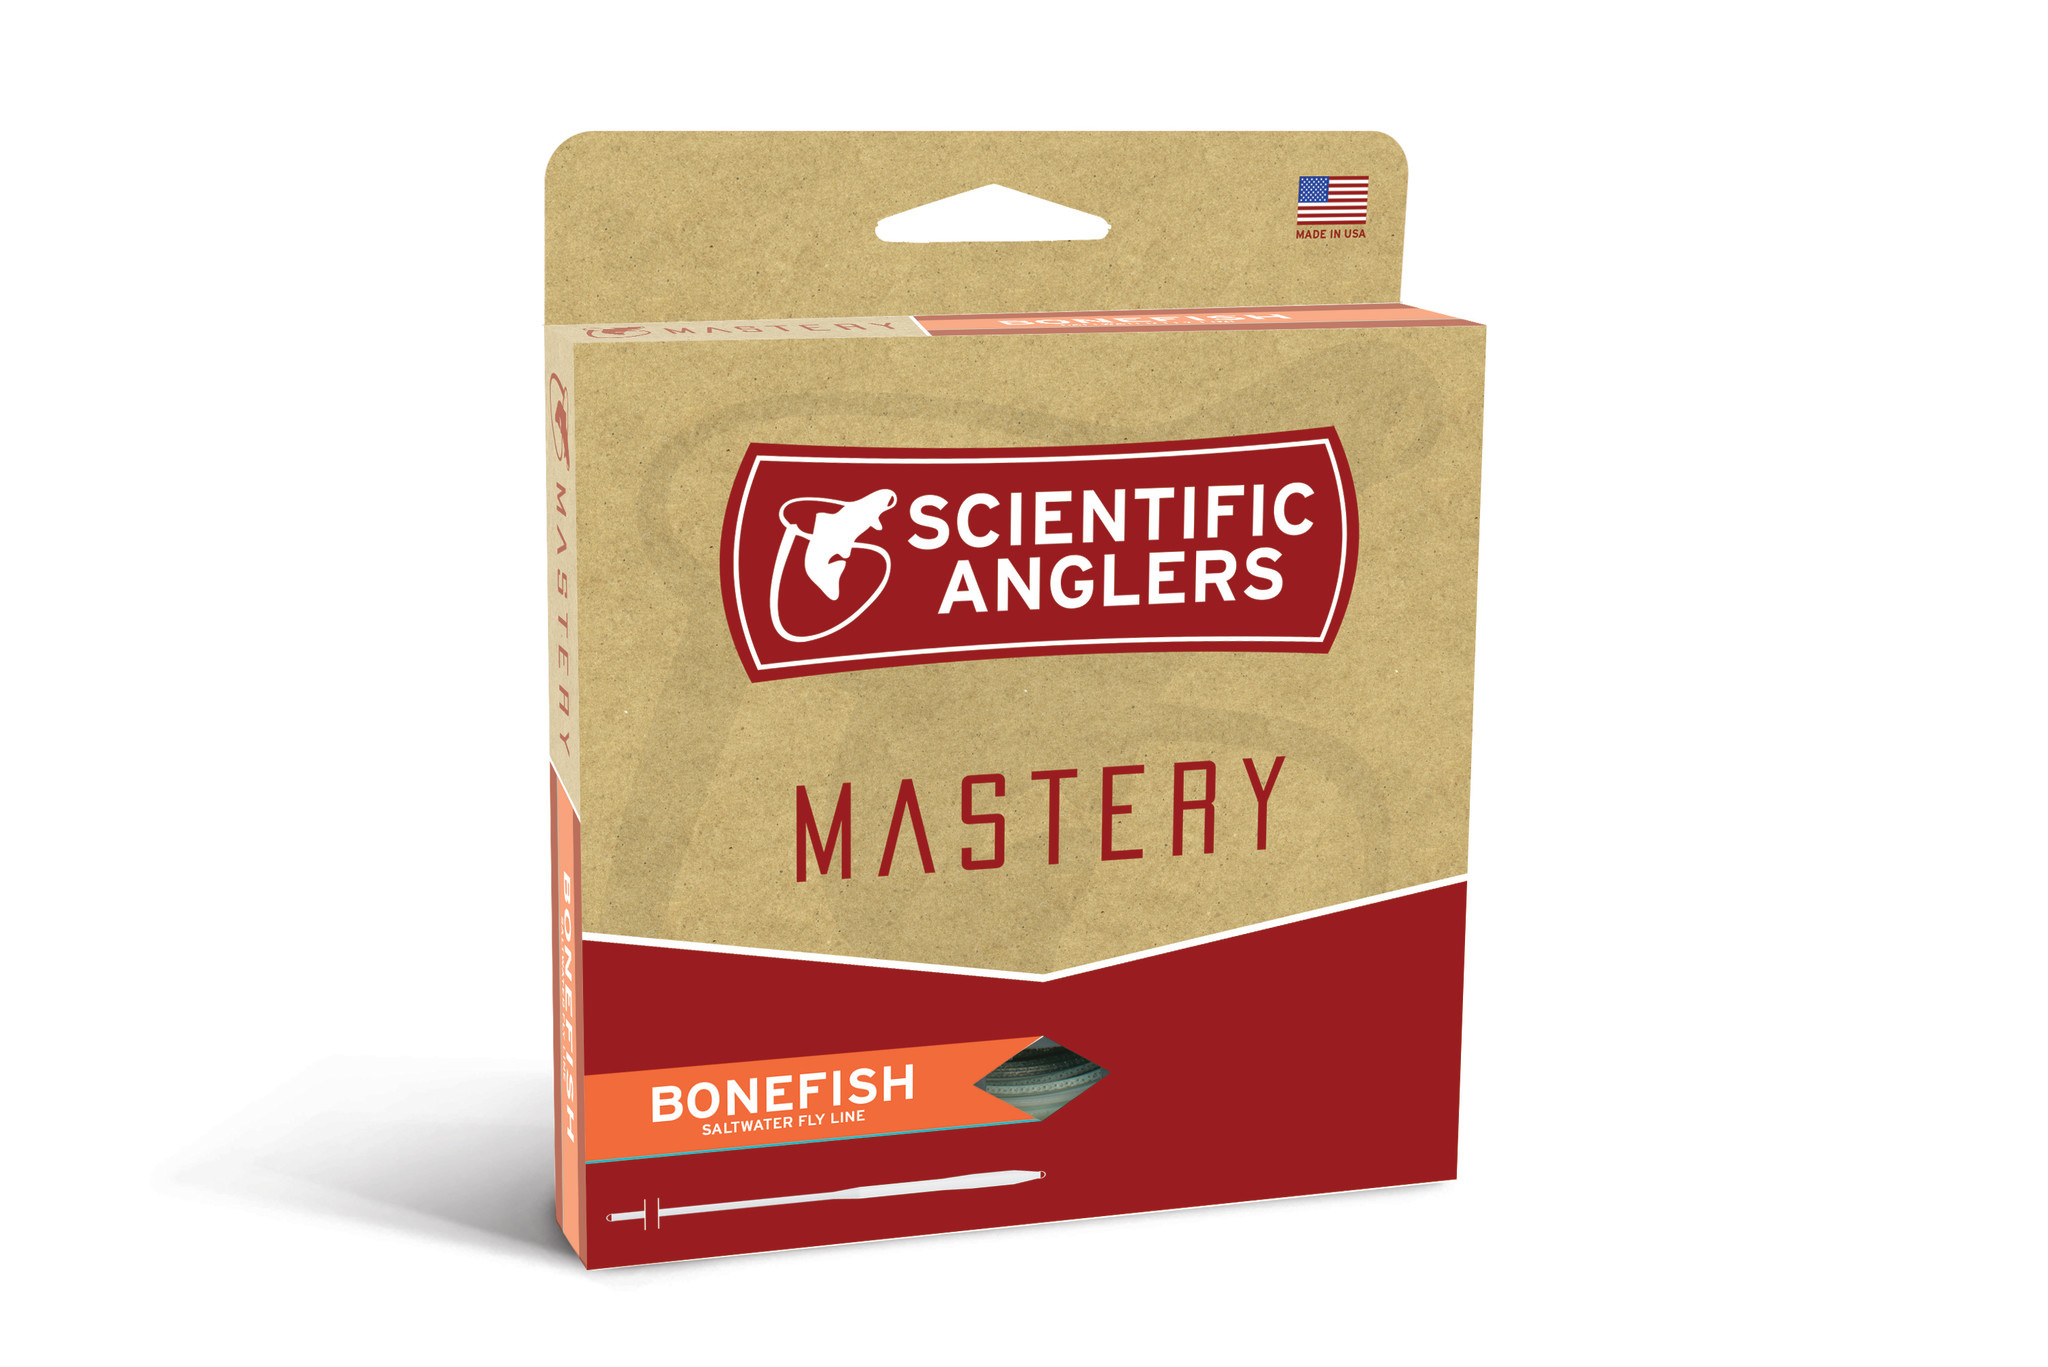 Scientific Anglers Scientific Anglers Mastery Bonefish